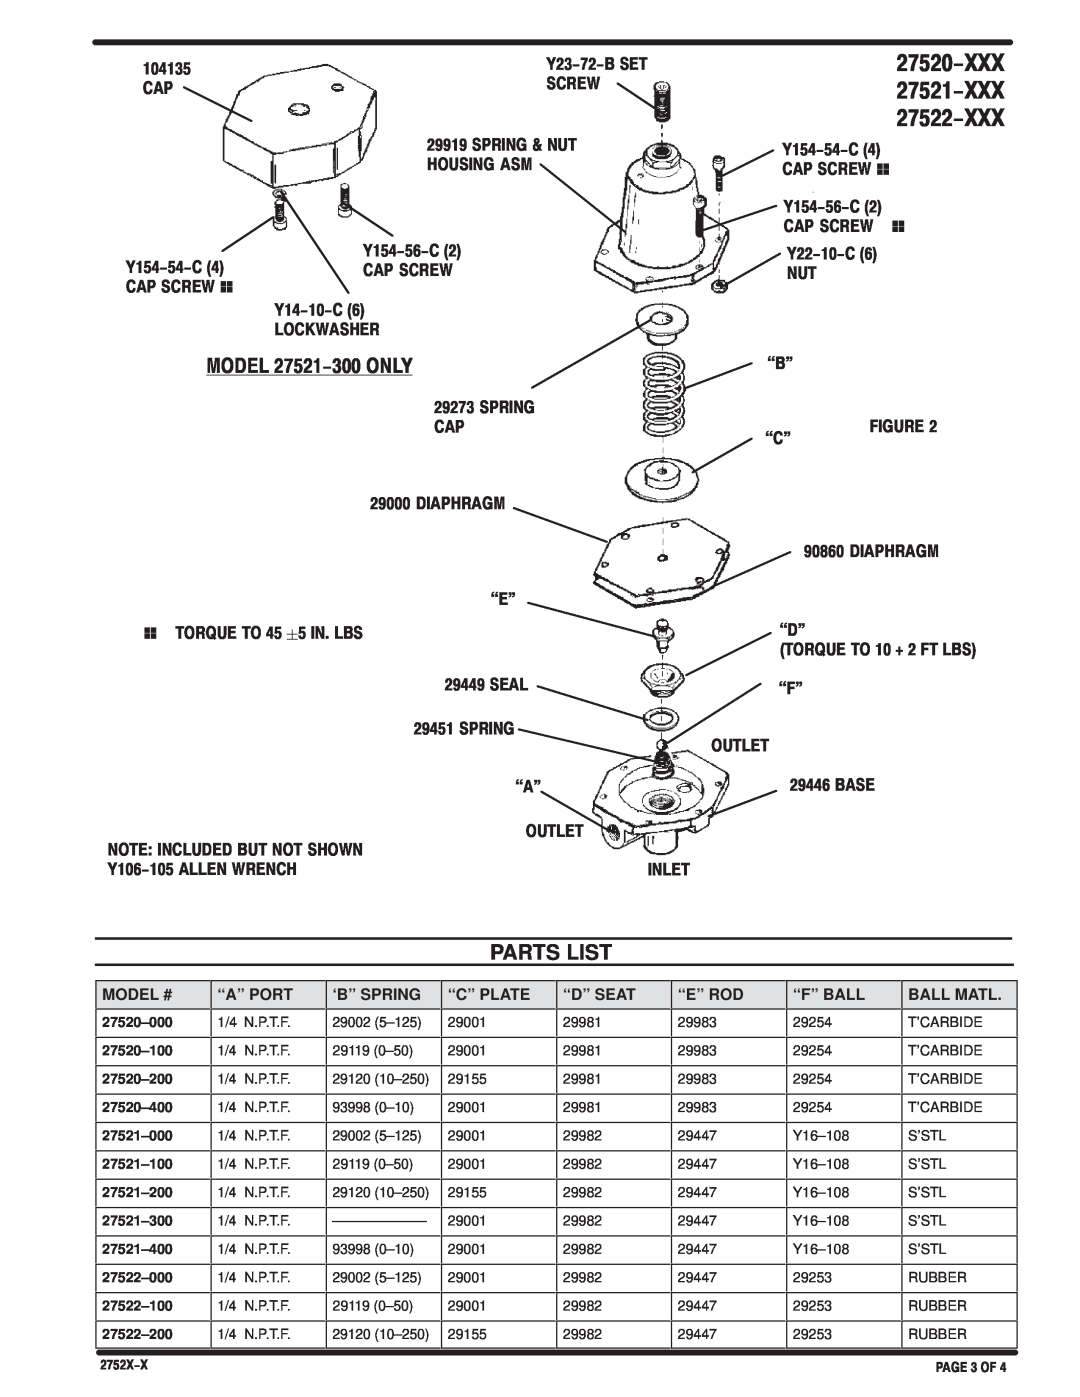 Ingersoll-Rand 2752X-X manual Parts List, 27520-XXX, MODEL 27521-300ONLY 